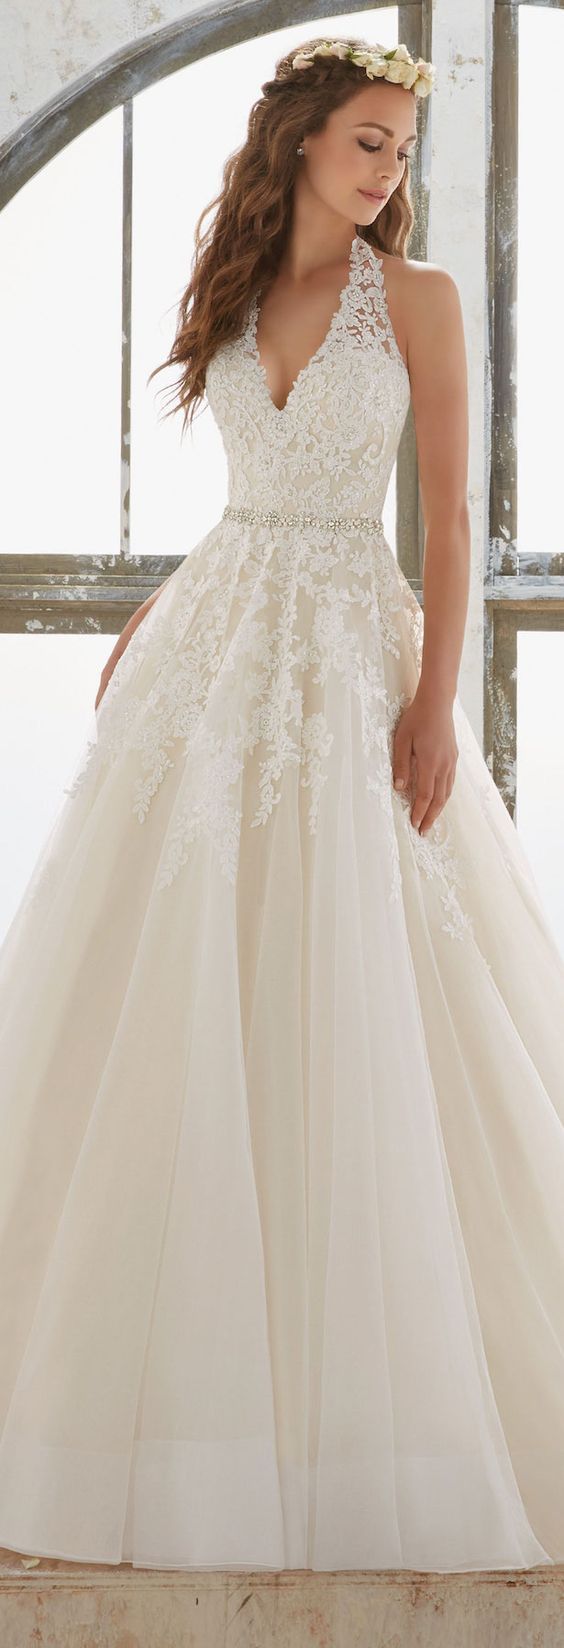 Hochzeit - Wedding Dress Inspiration - Mori Lee